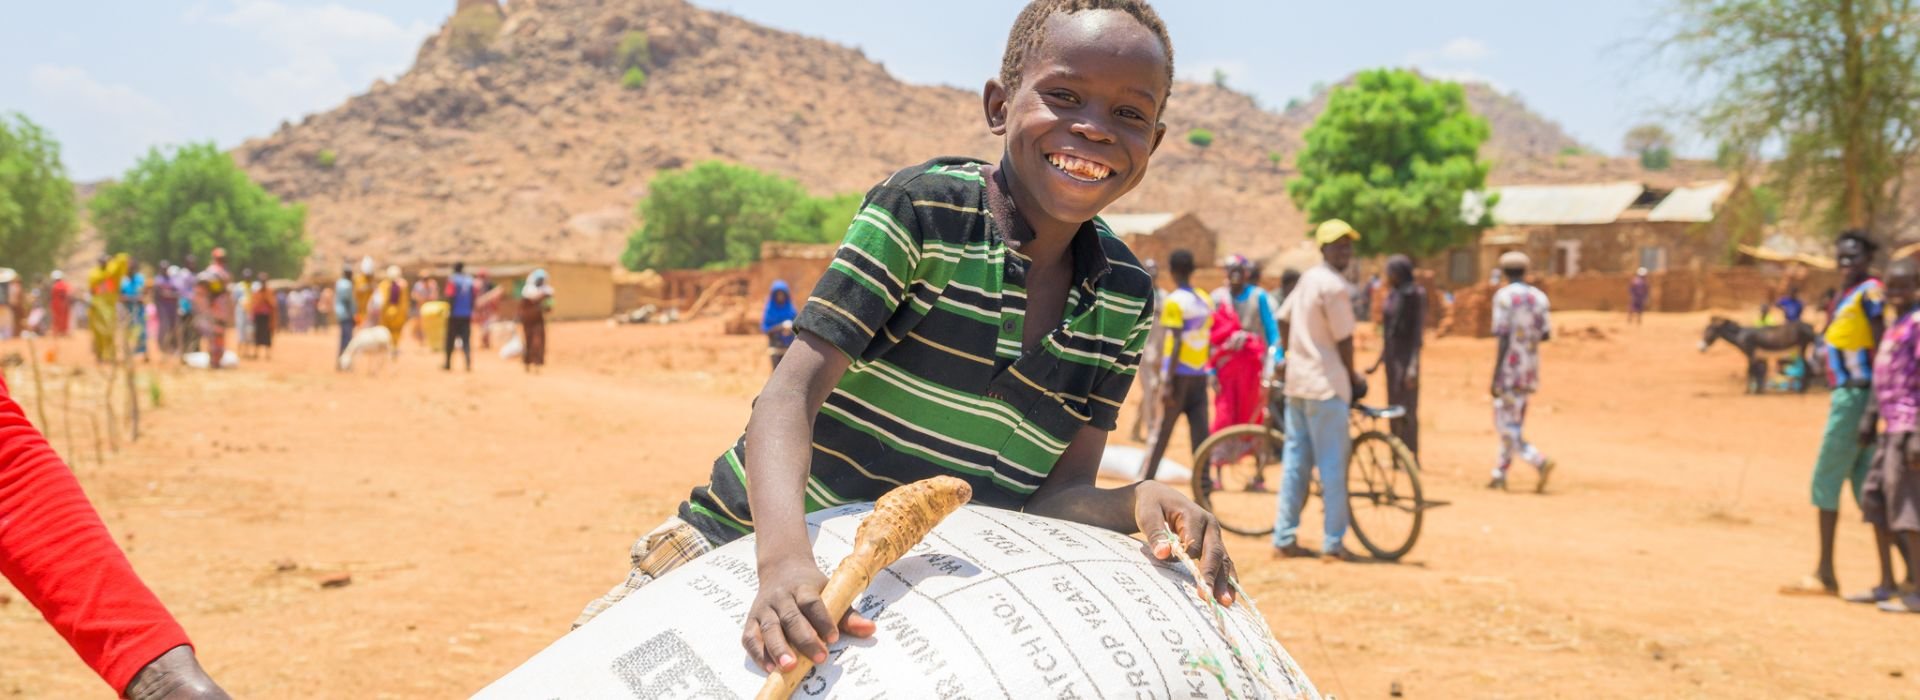 Samaritan's Purse bringt Lebensmittel in den Sudan